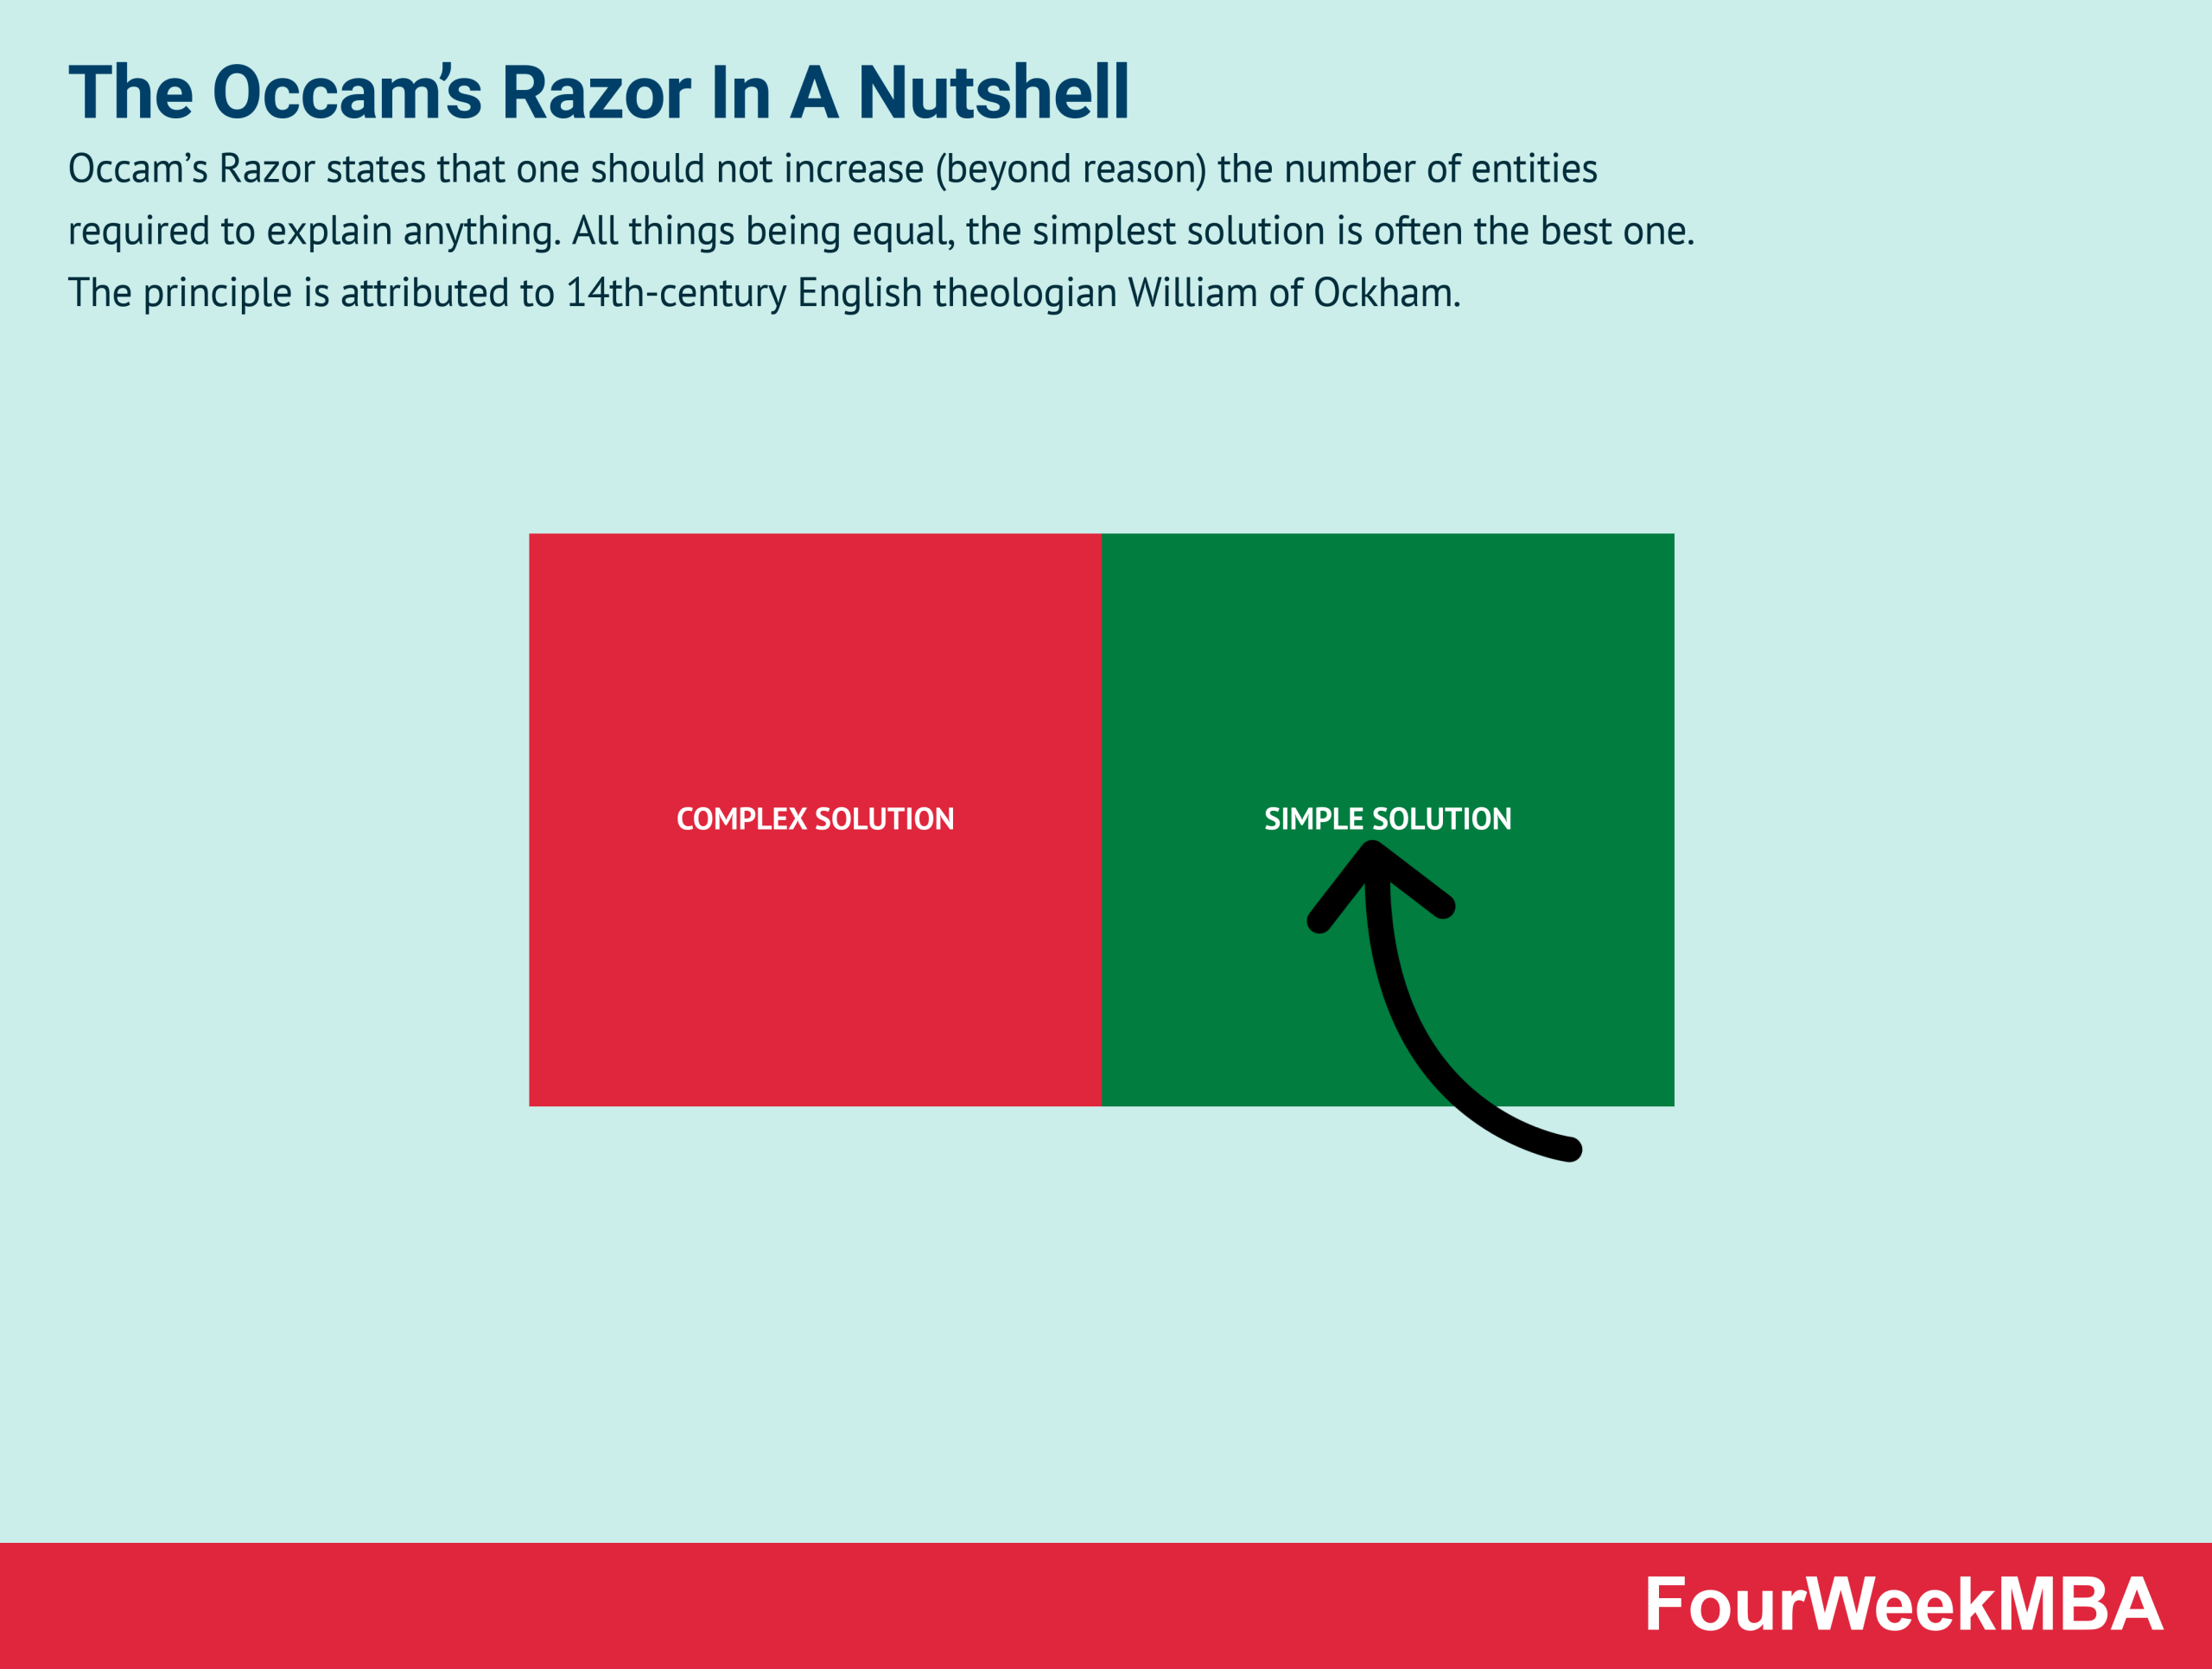 What is Occam’s Razor?